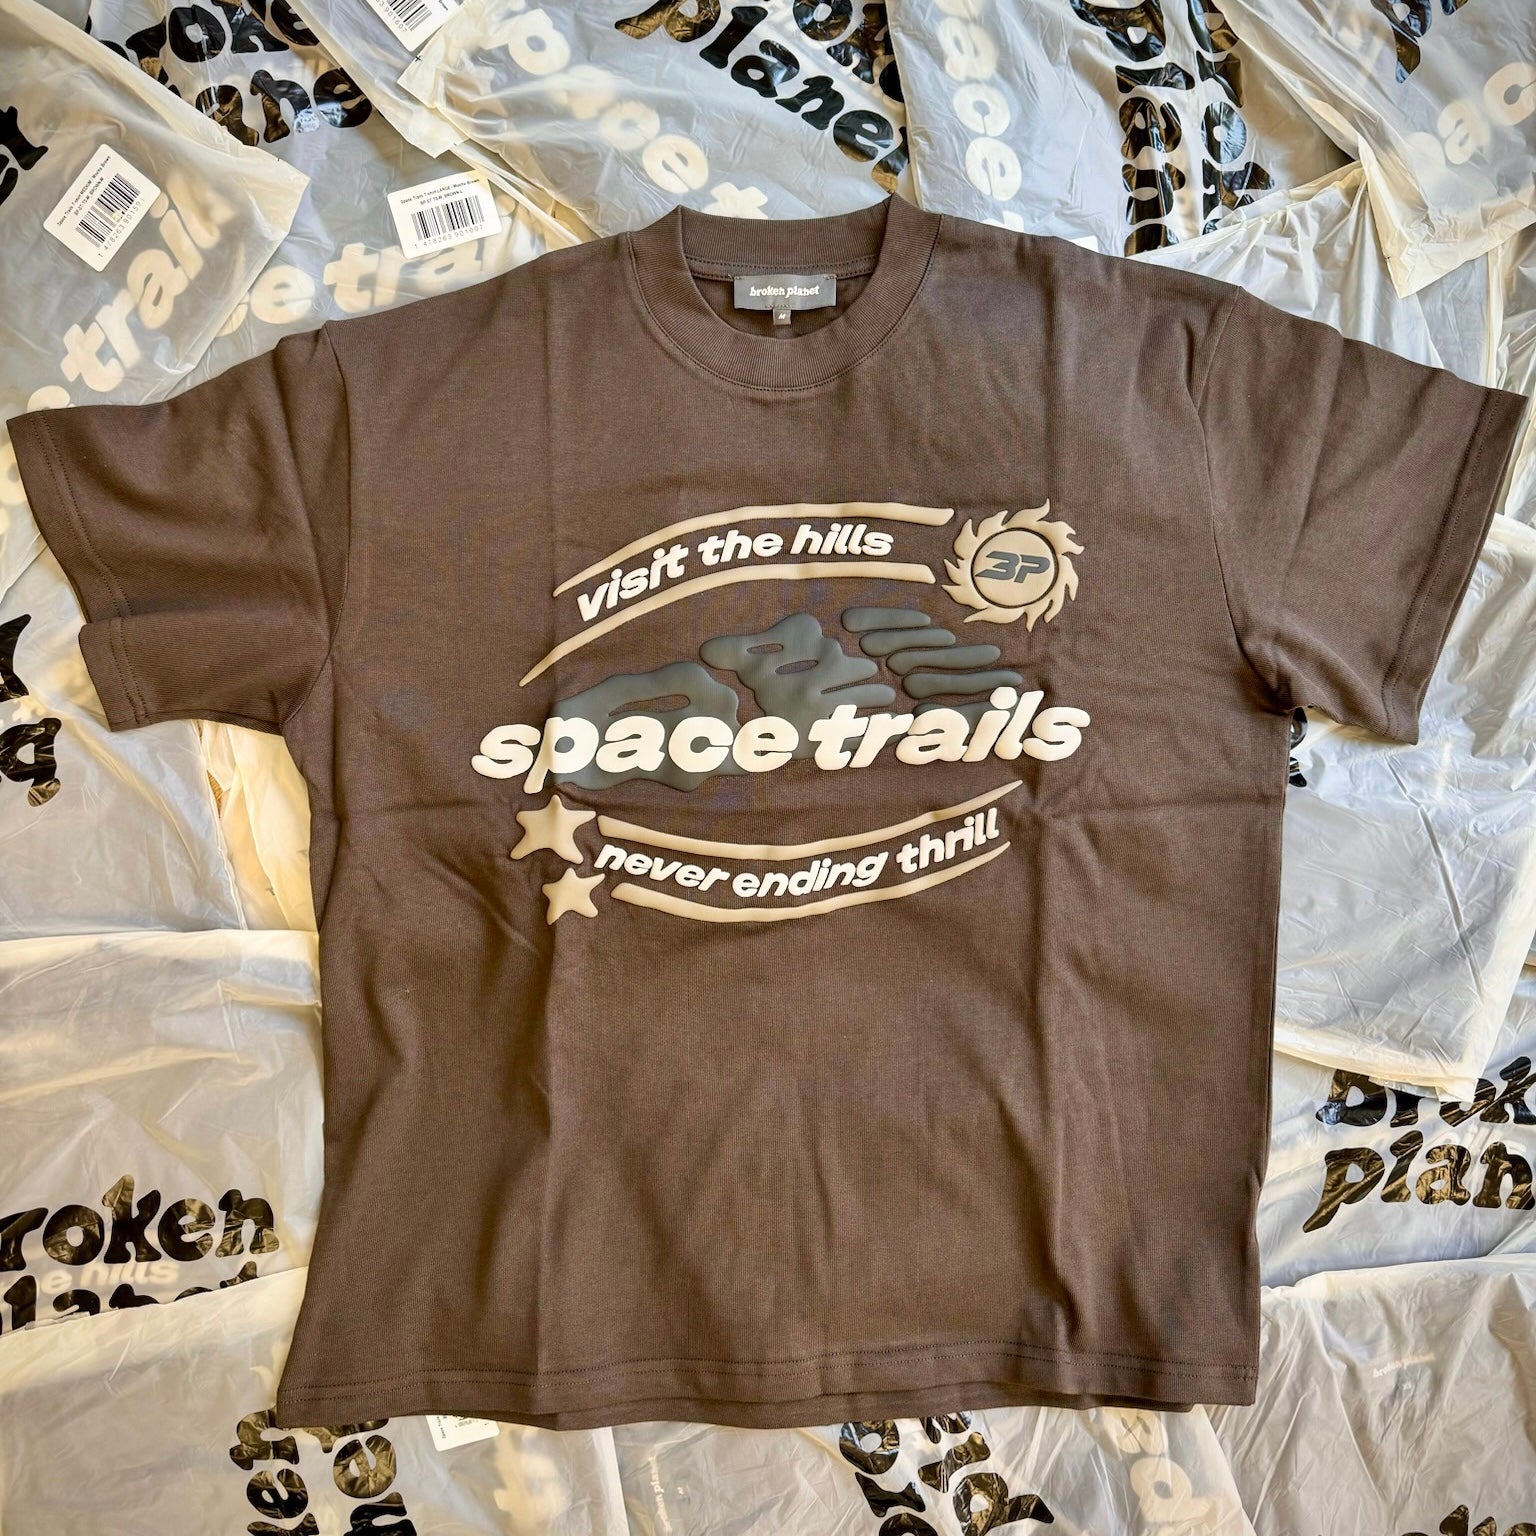 Broken Planet Market Space Trails T-Shirt Mocha Brown by Broken Planet Market from £85.00